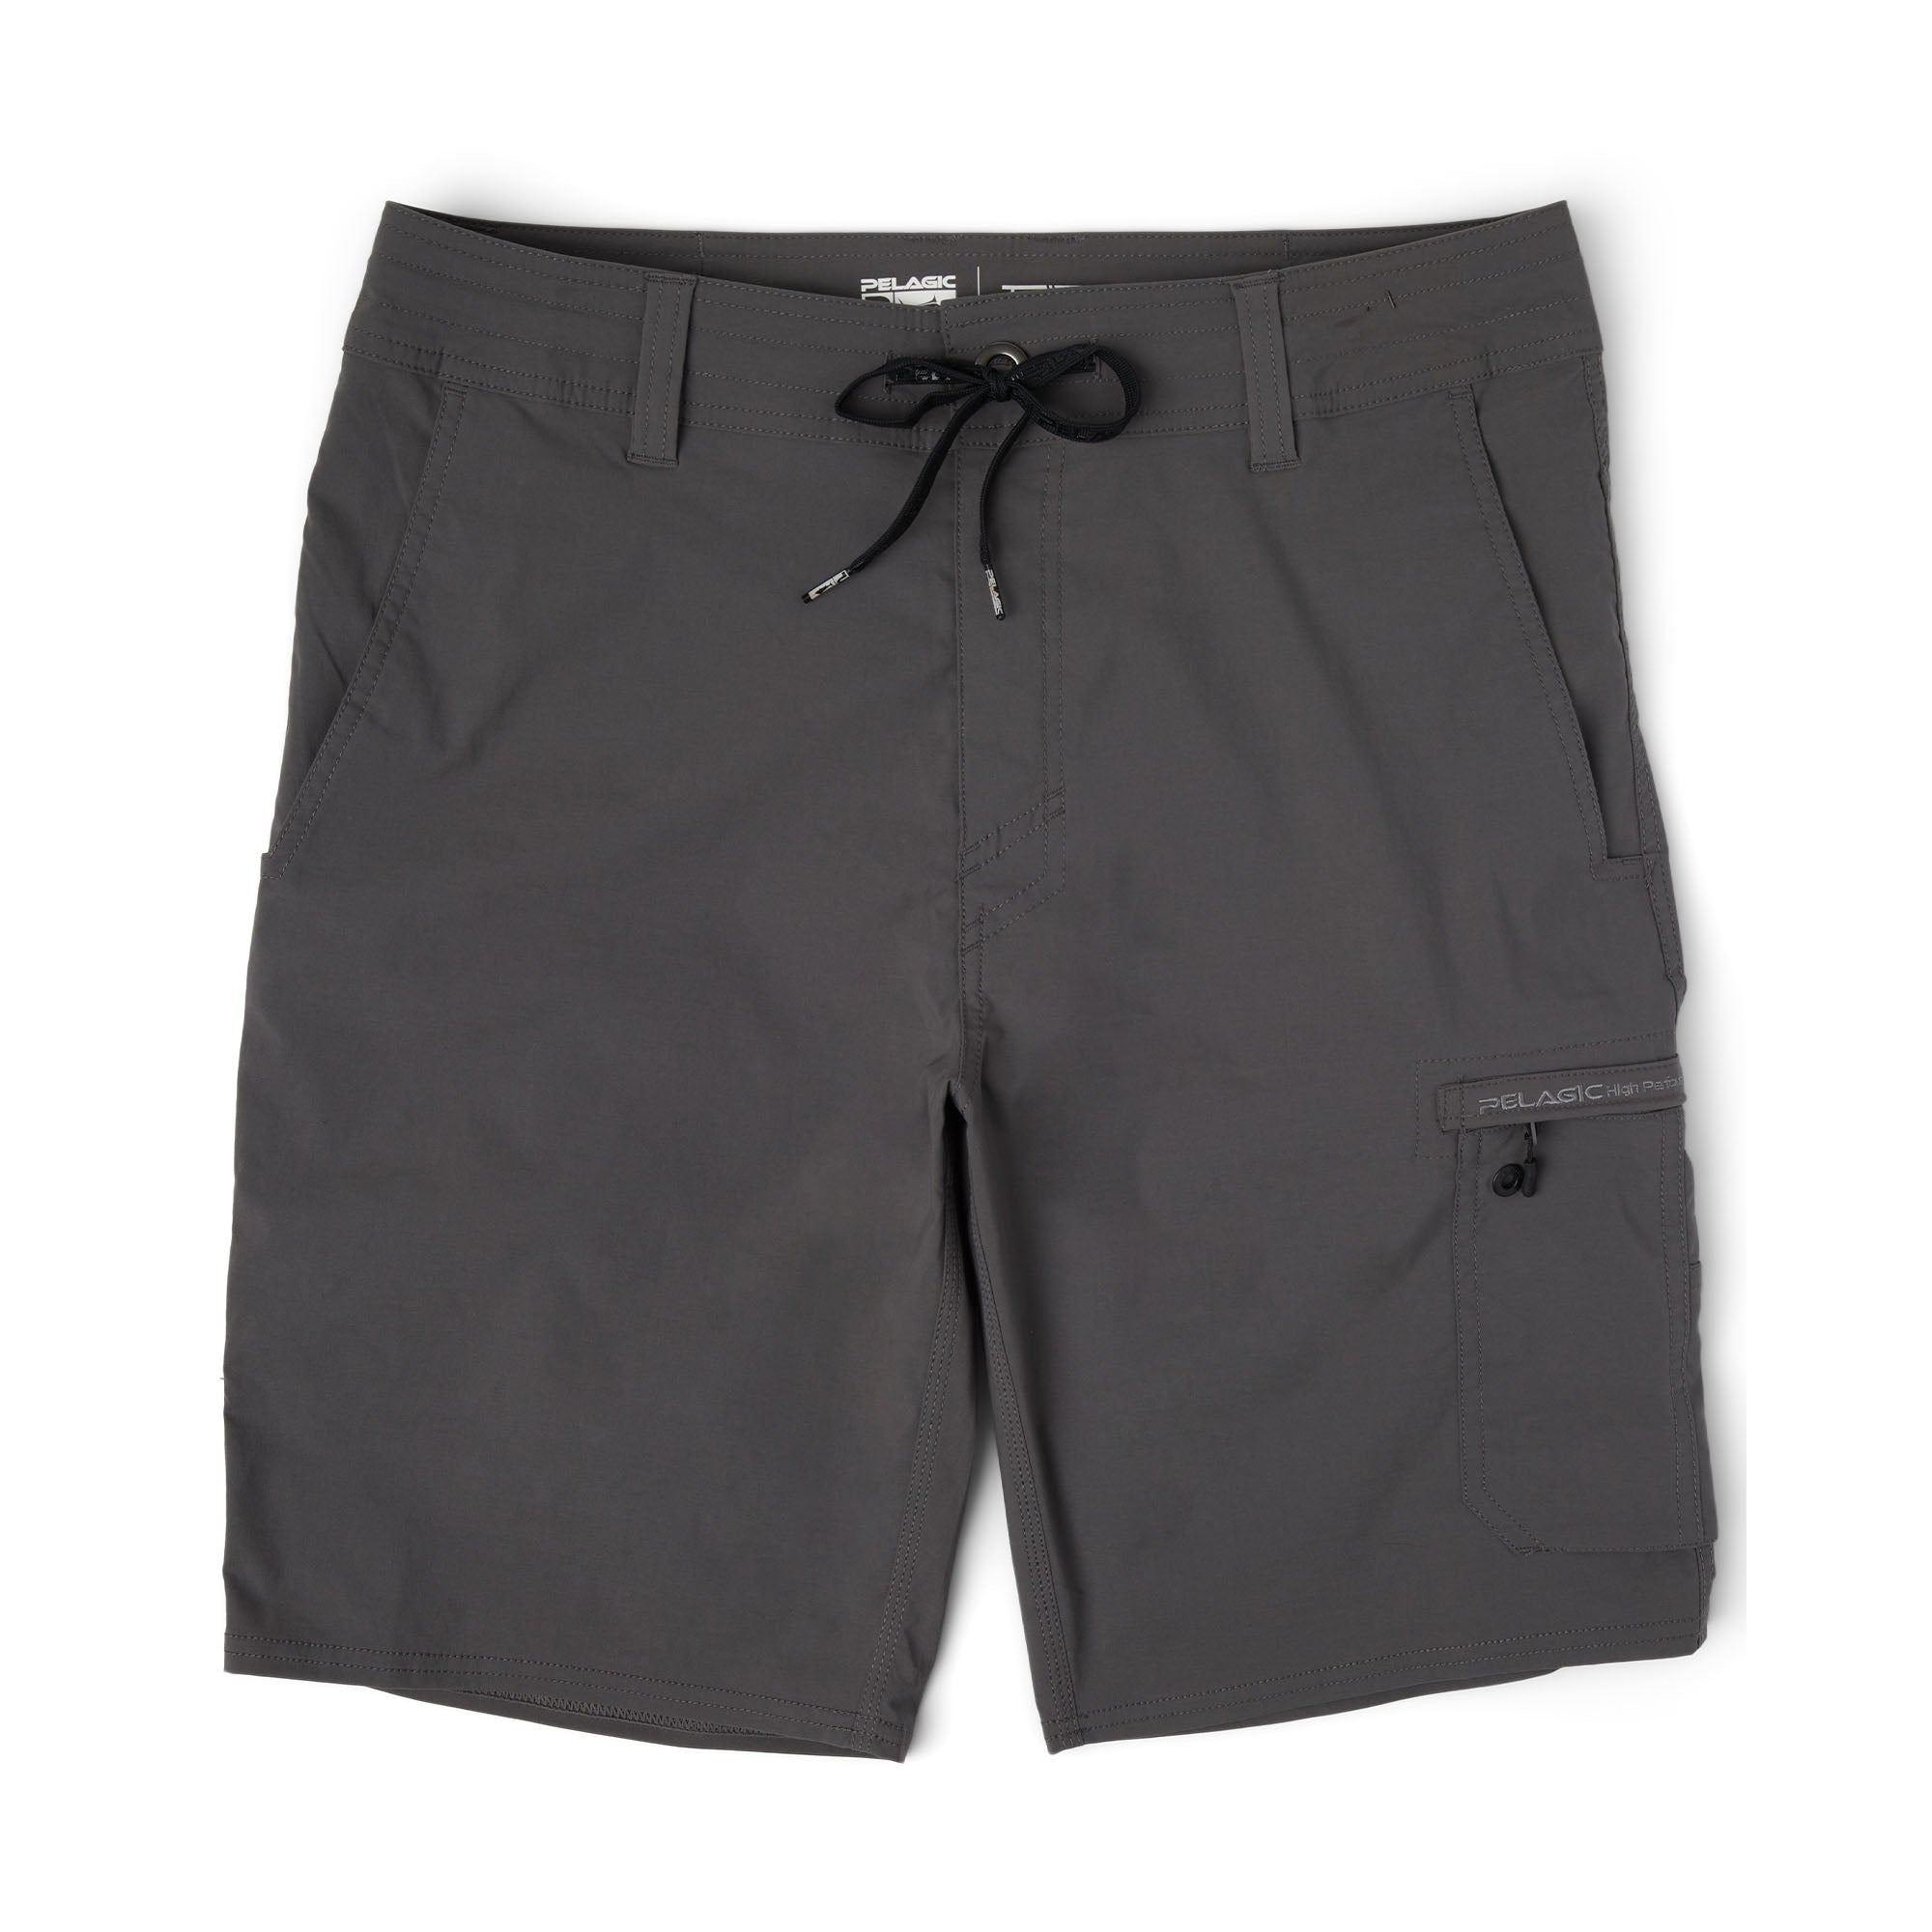 Pelagic Traverse Fishing Shorts for Men - Charcoal - 36